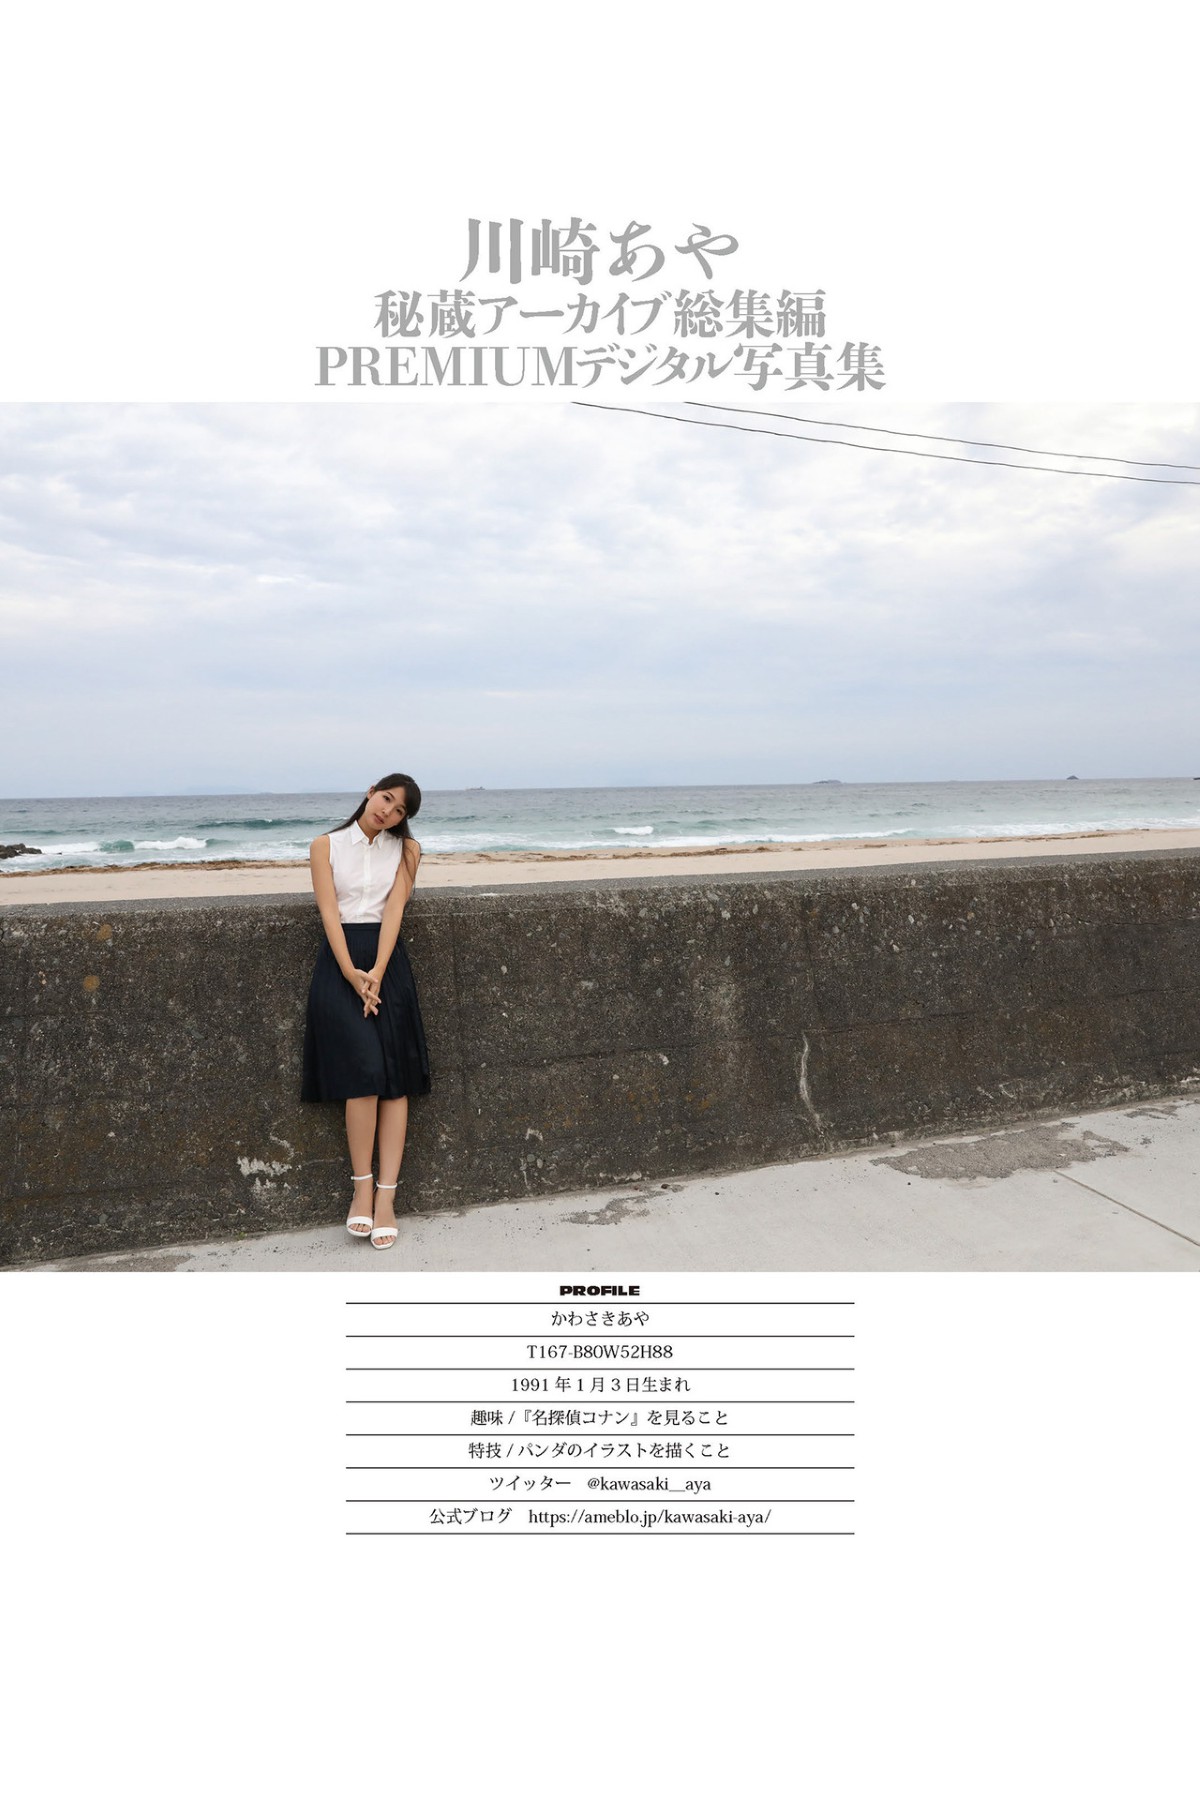 Photobook 2020 03 26 Aya Kawasaki 川崎あや Treasured B 0067 9902724973.jpg